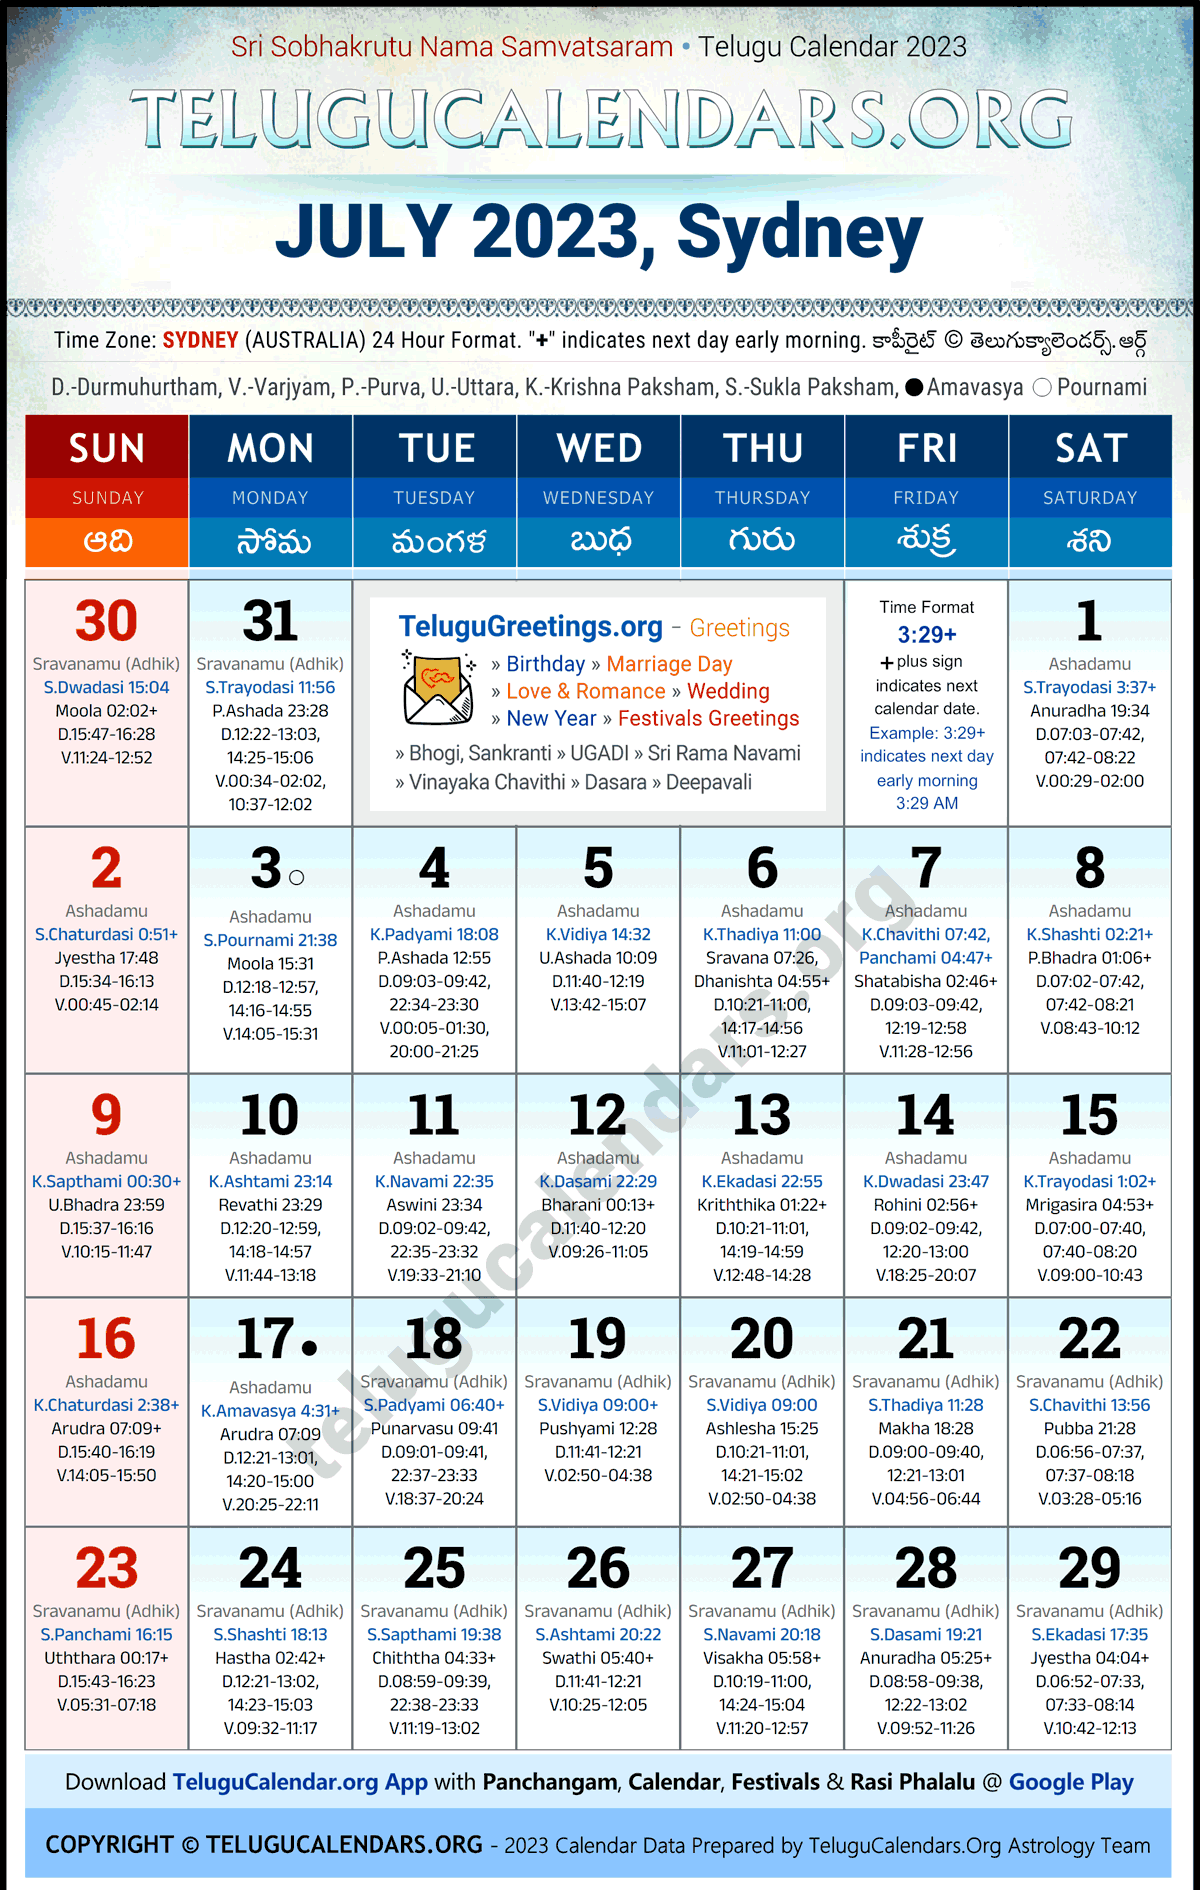 Telugu Calendar 2023 July Festivals for Sydney